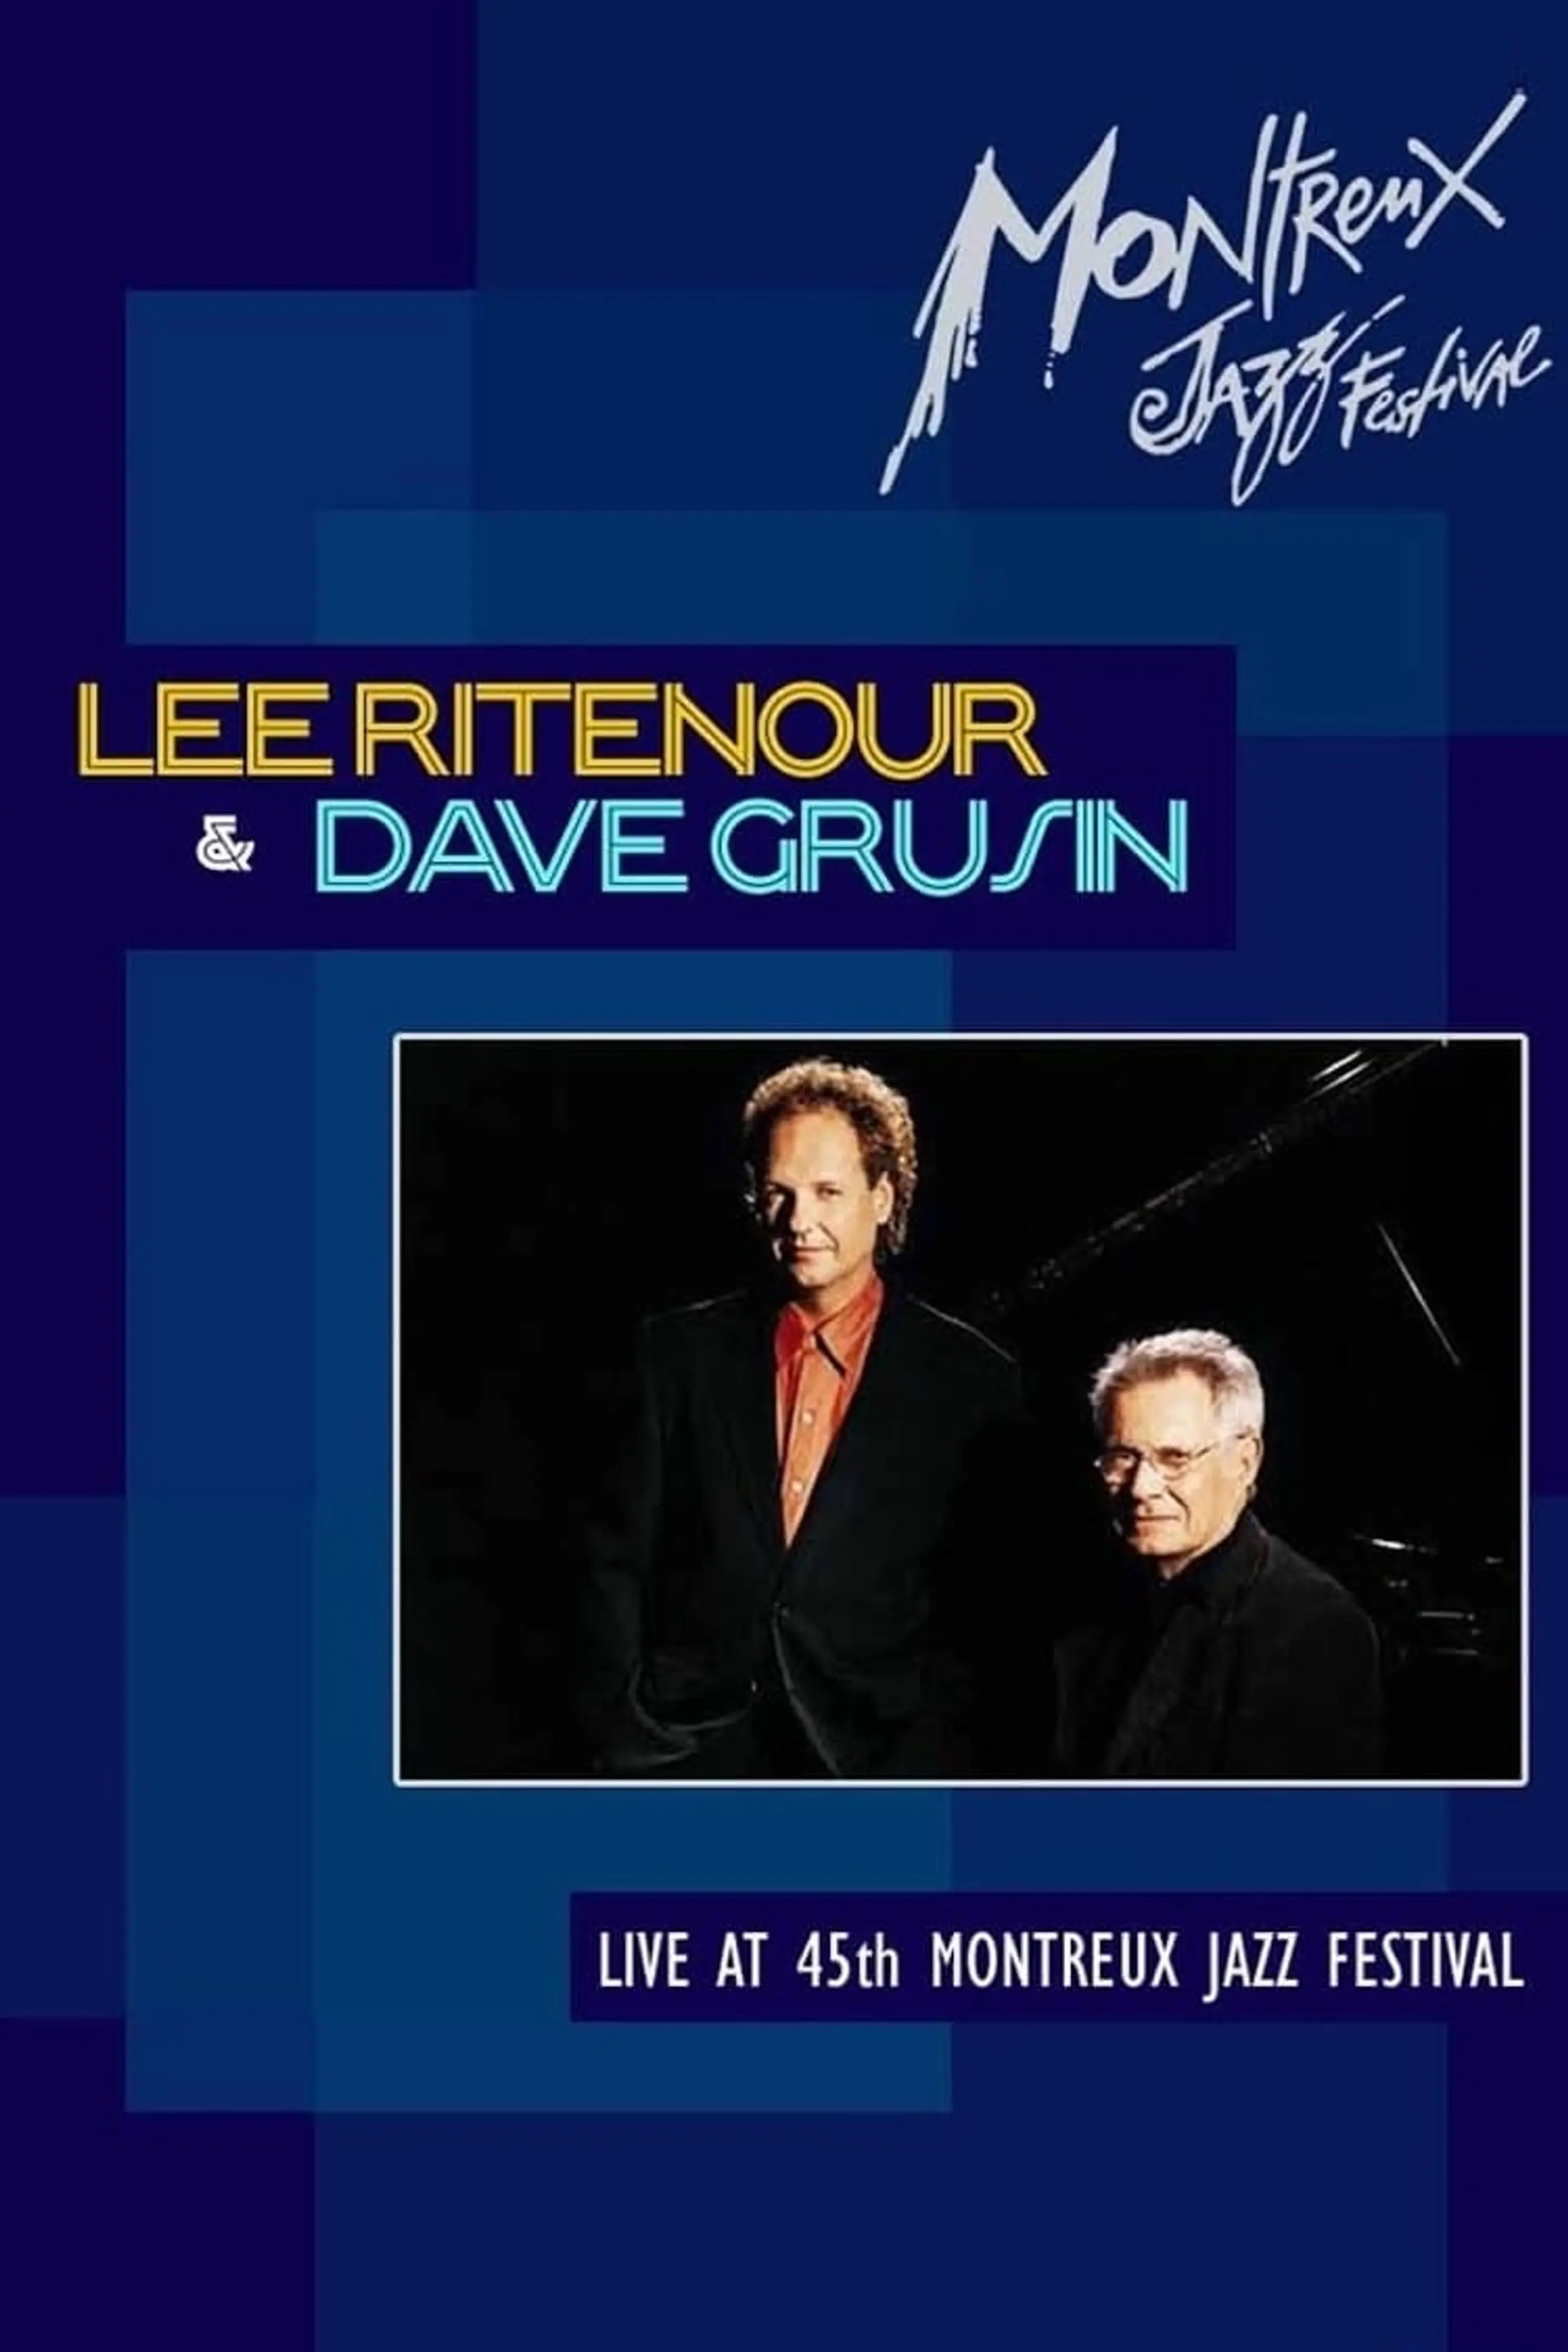 Lee Ritenour & Dave Grusin: Jazzfestival Montreux